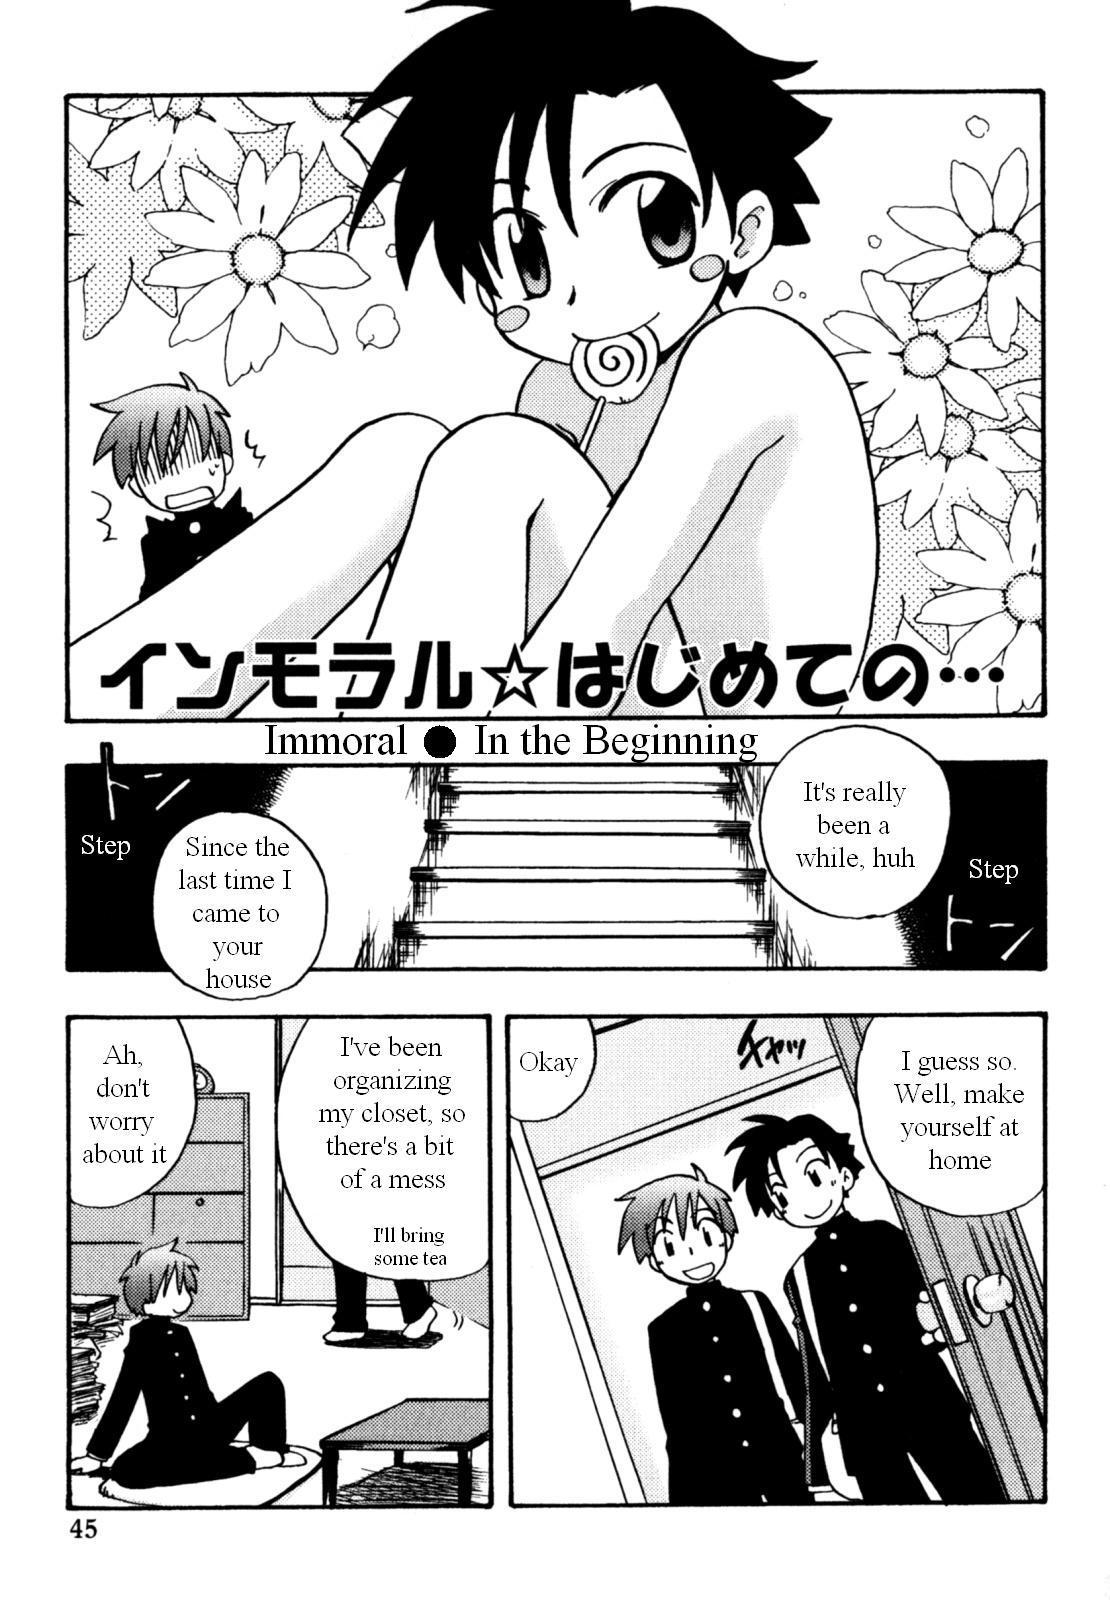 Immoral Boys by Kirigakure Takaya 44